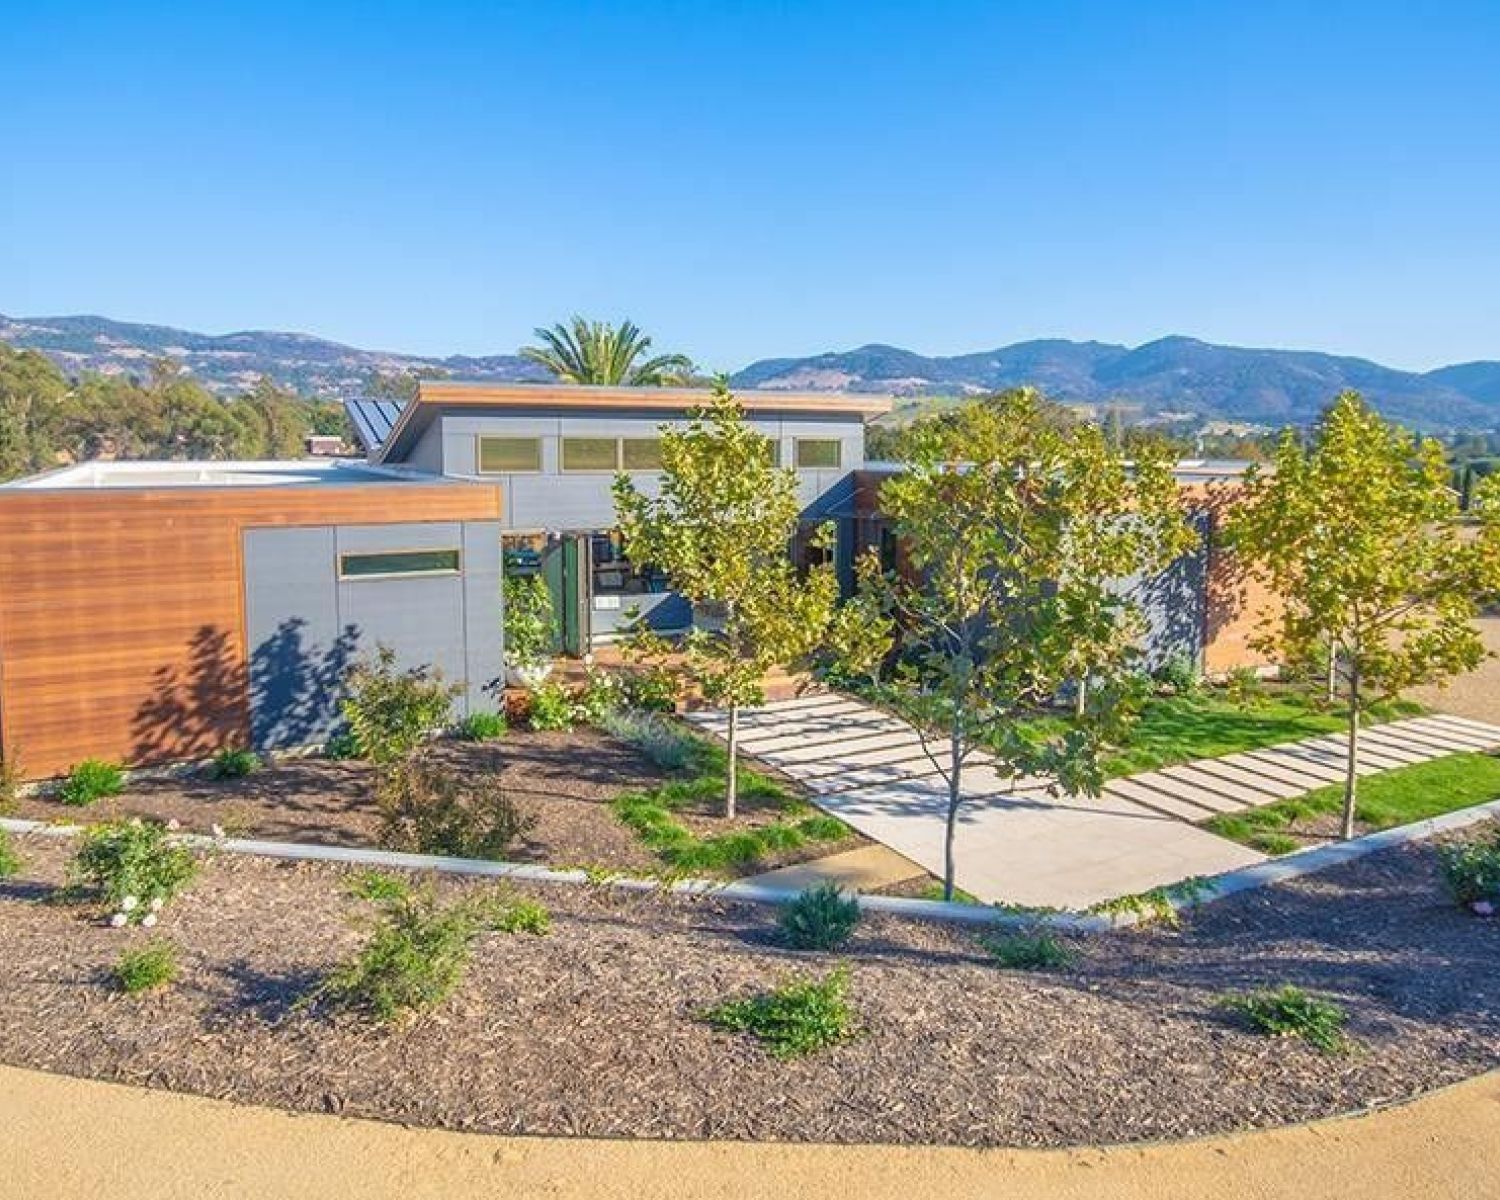 landscape of modern california home